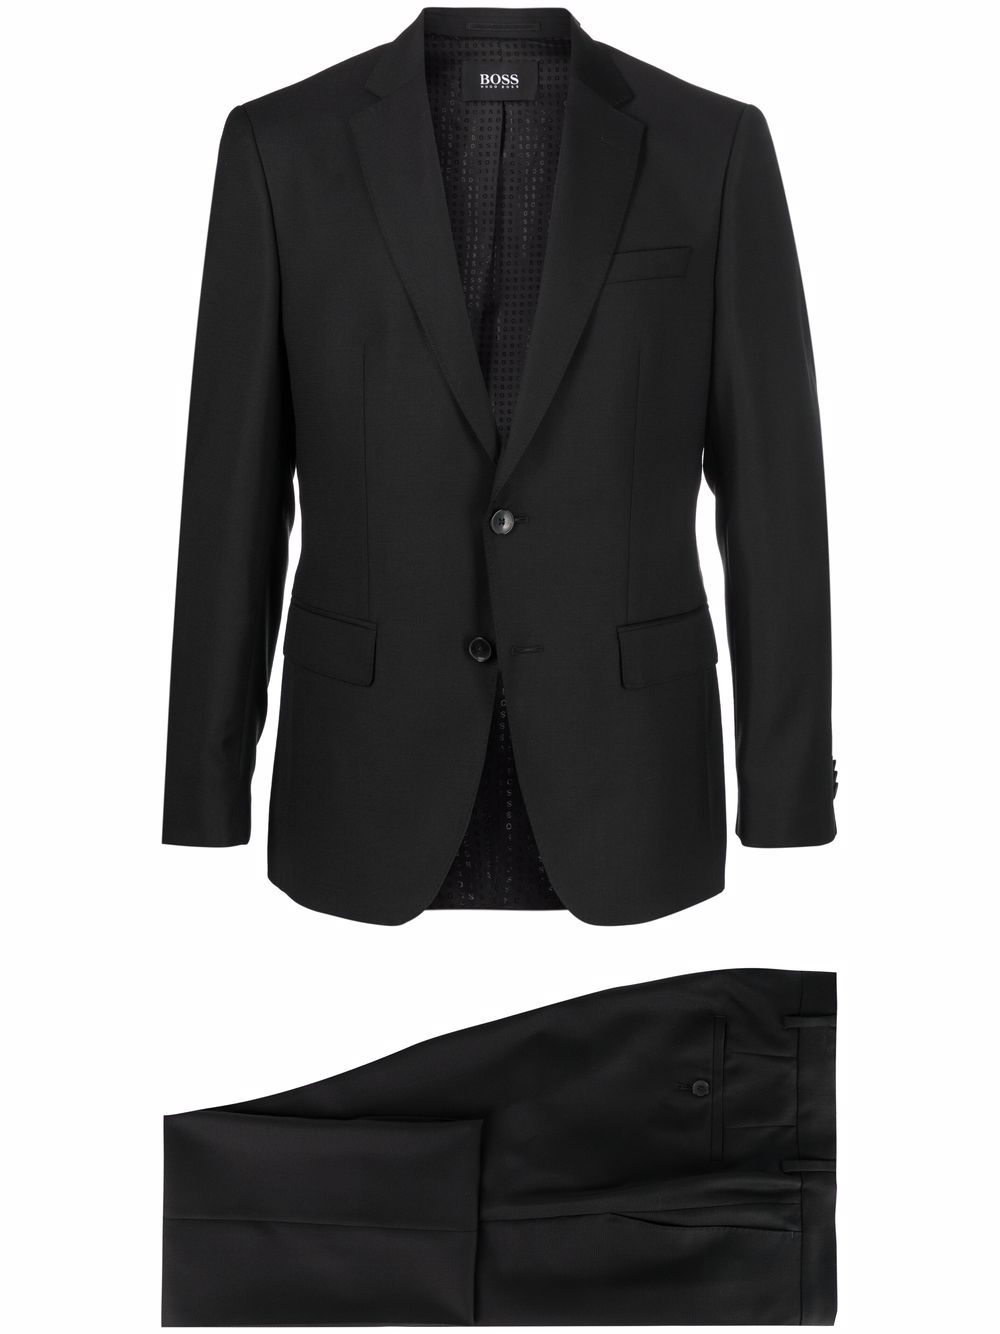 ＜Farfetch＞ Boss Hugo Boss ツーピース スーツ - ブラック